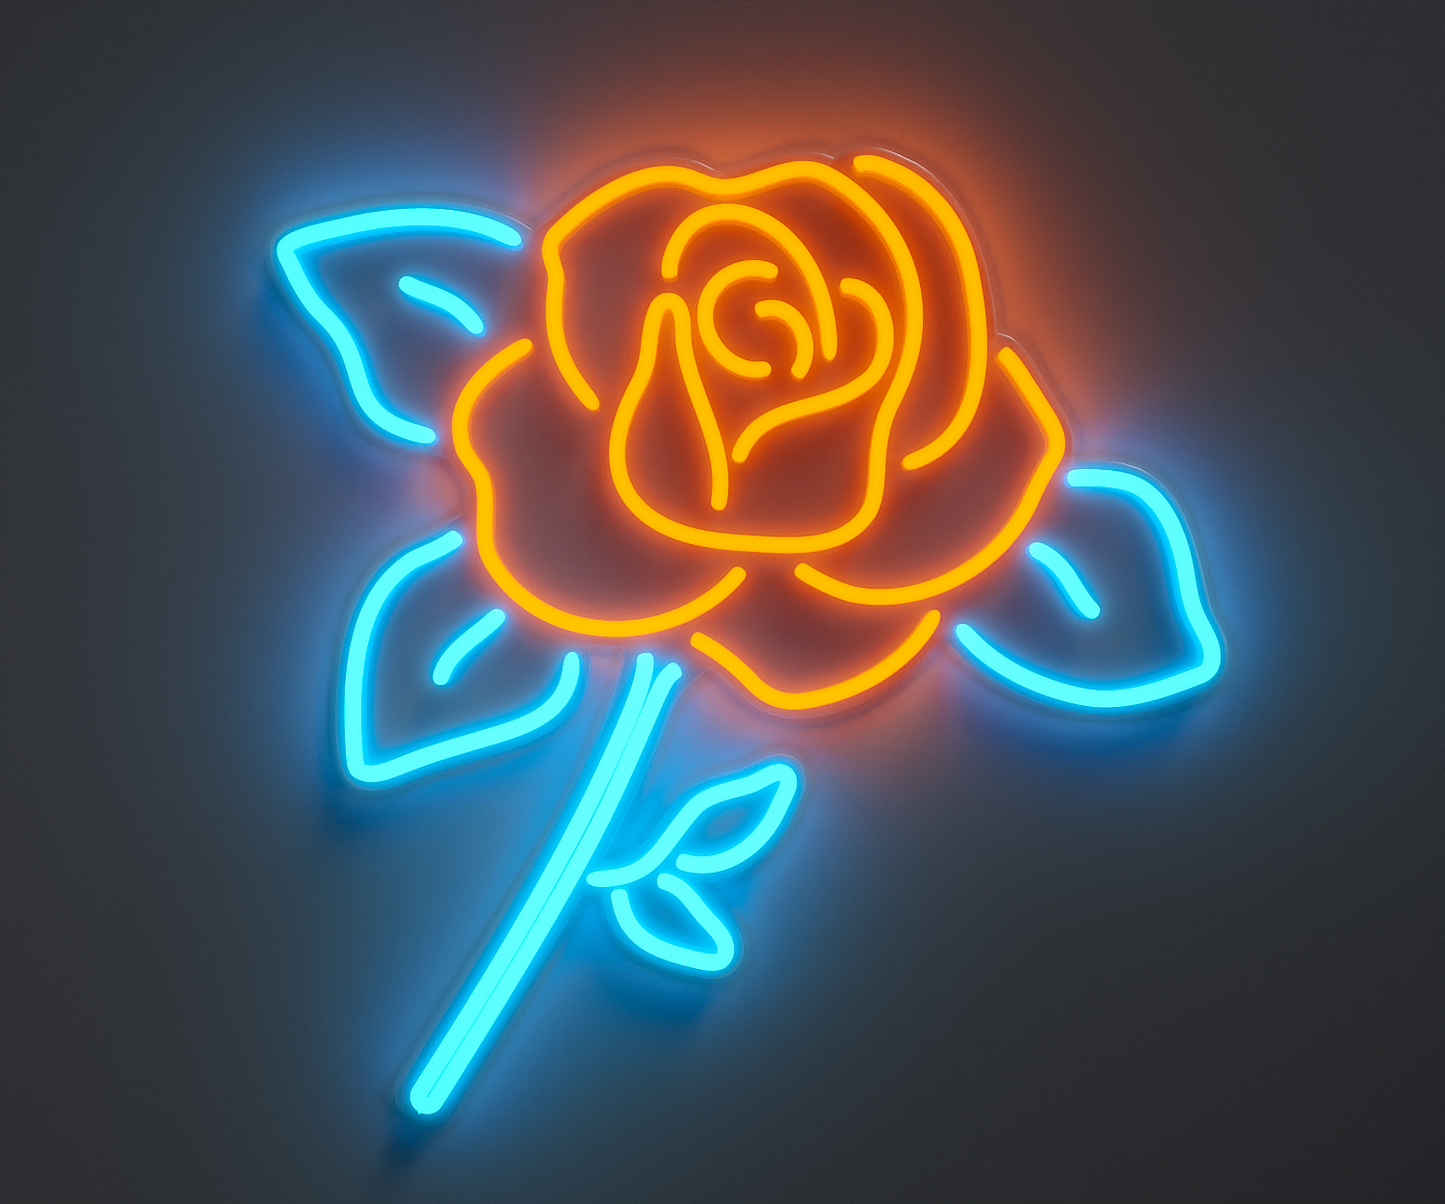 orange and light blue rose neon sign